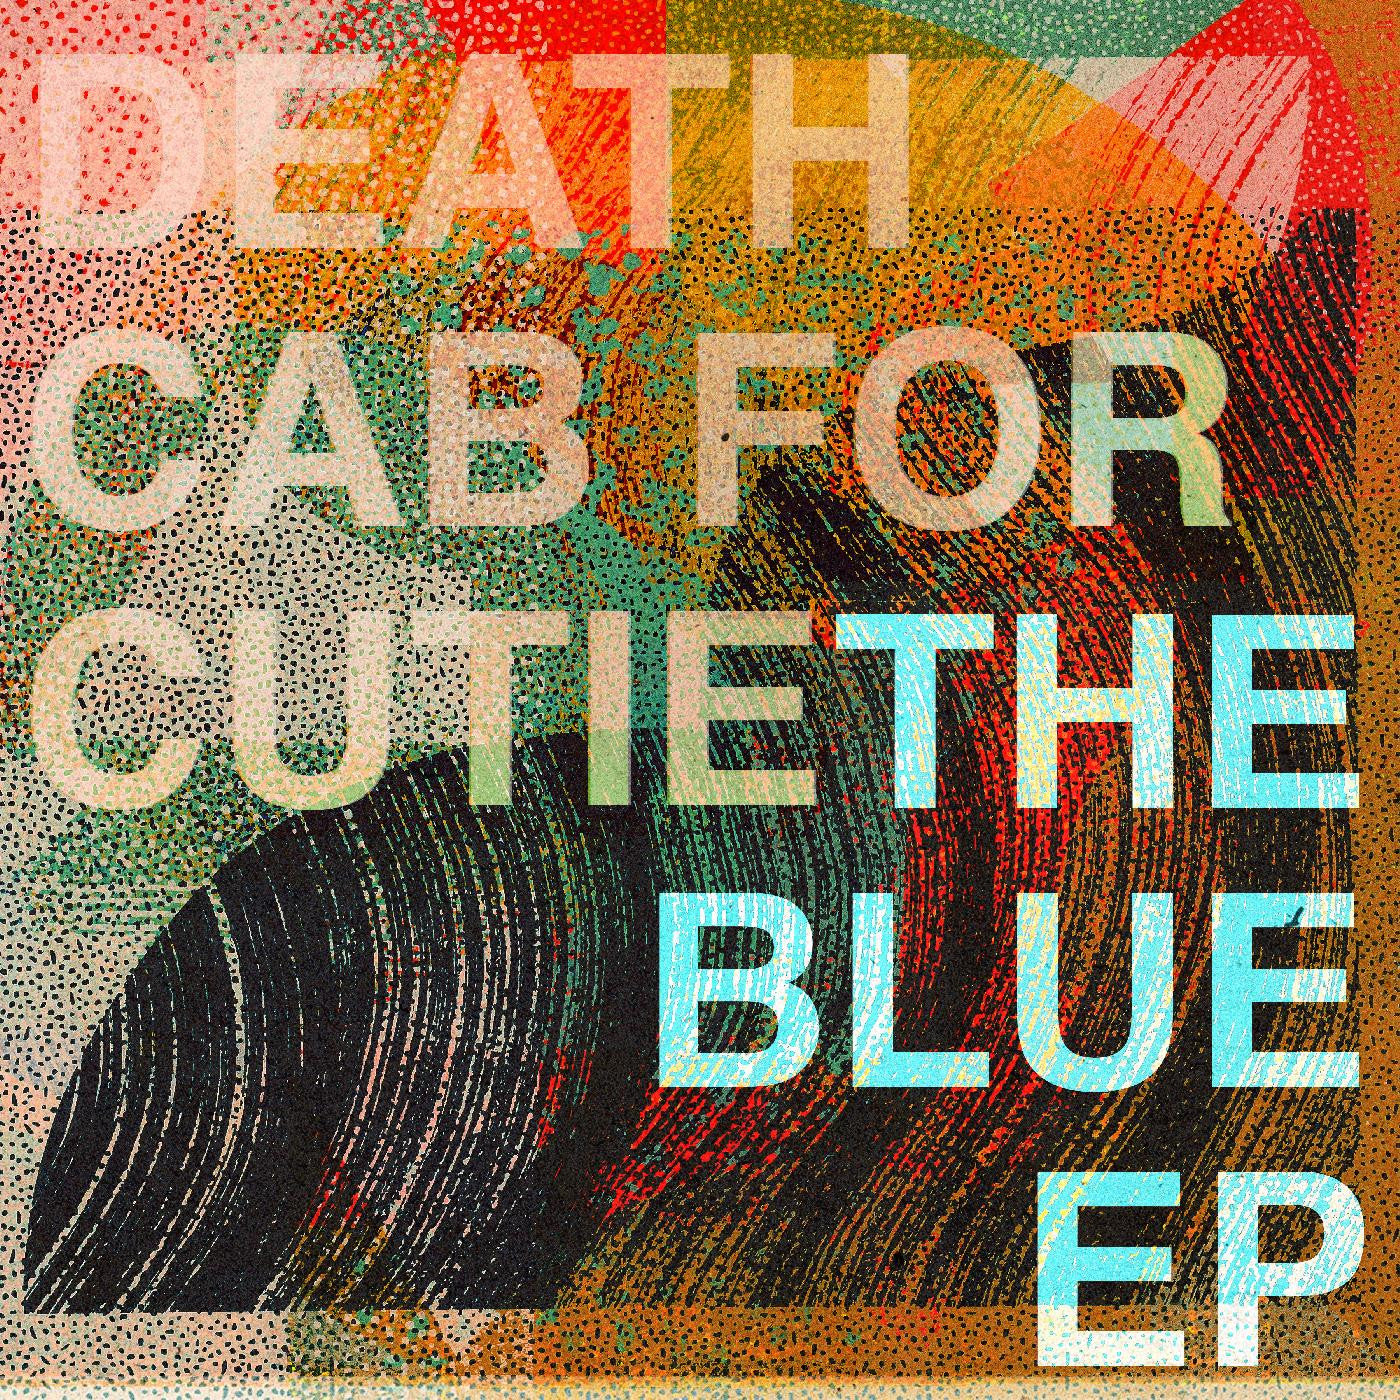 DEATH CAB FOR CUTIE - BLUE EP Vinyl 12"